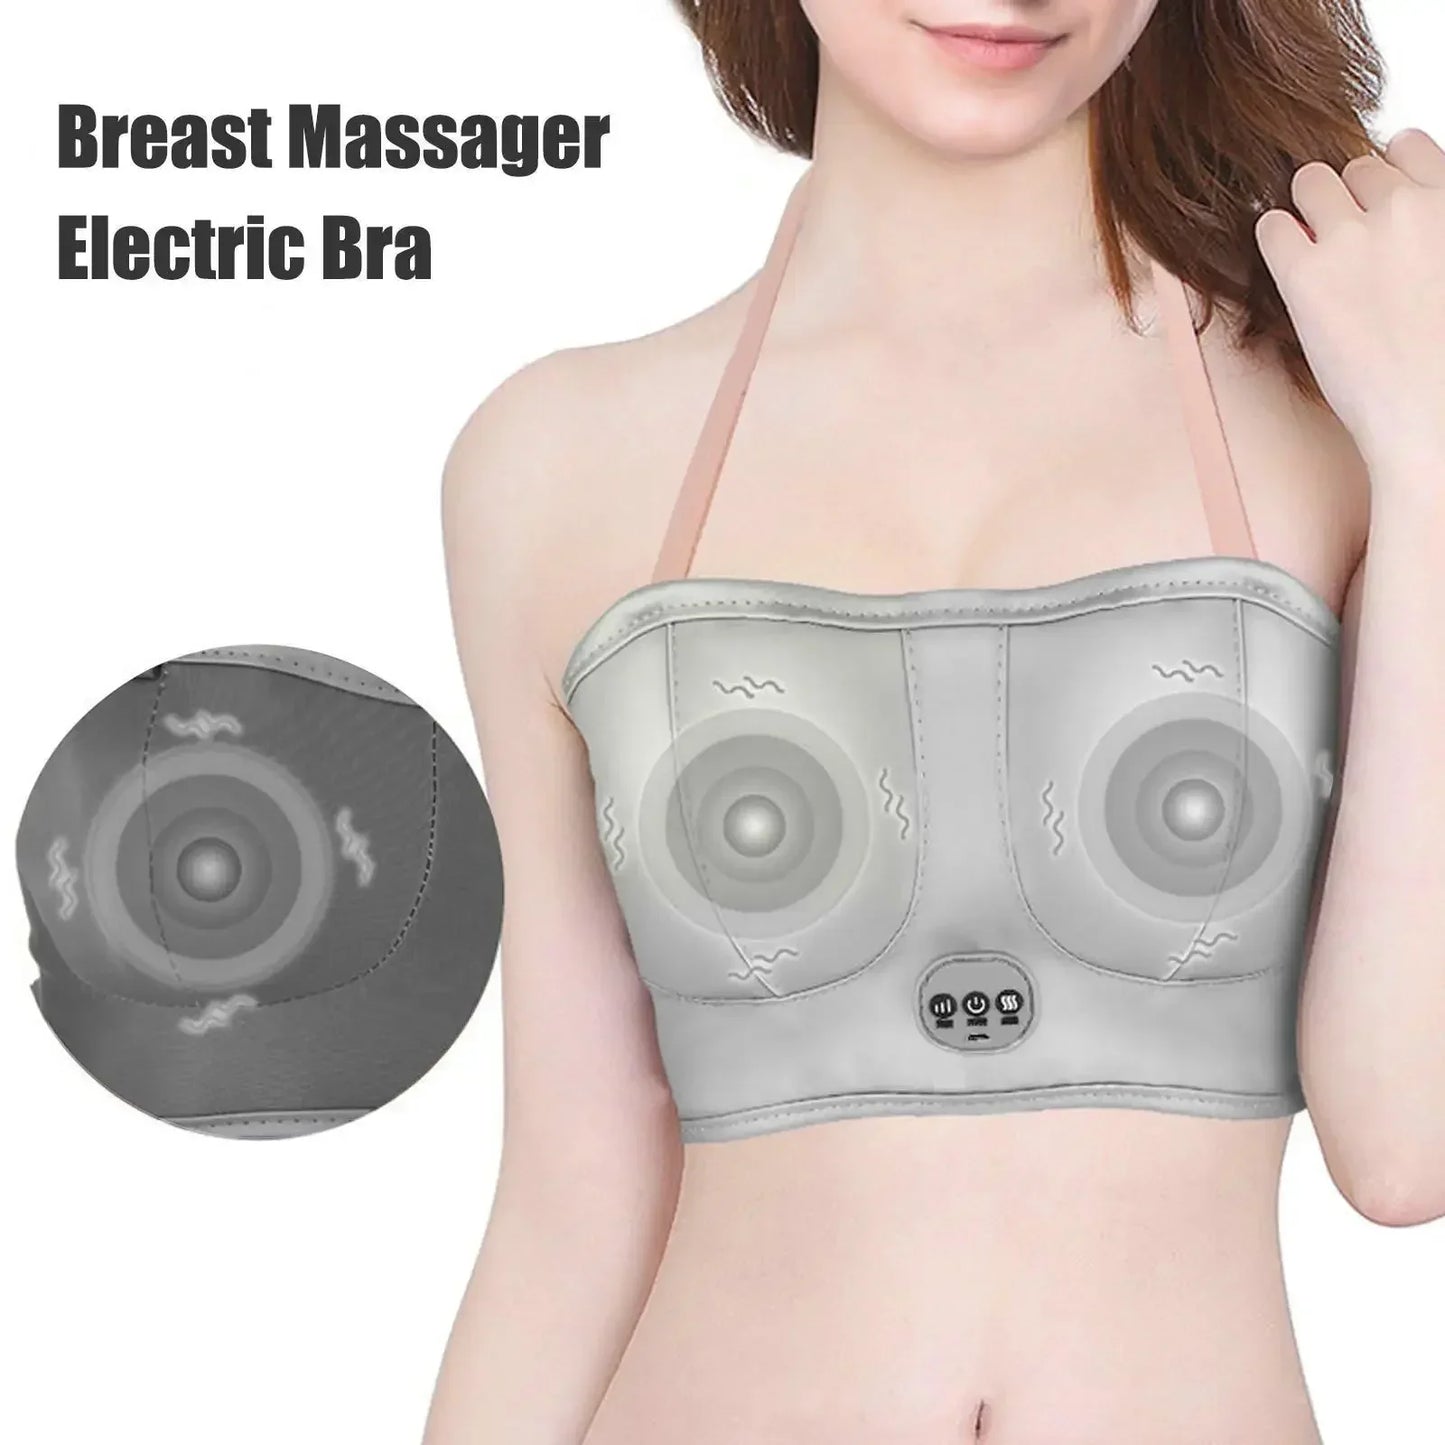 Electric Vibration Chest Massager Breast Enhancement Instrument Breast Heating Stimulator Machine